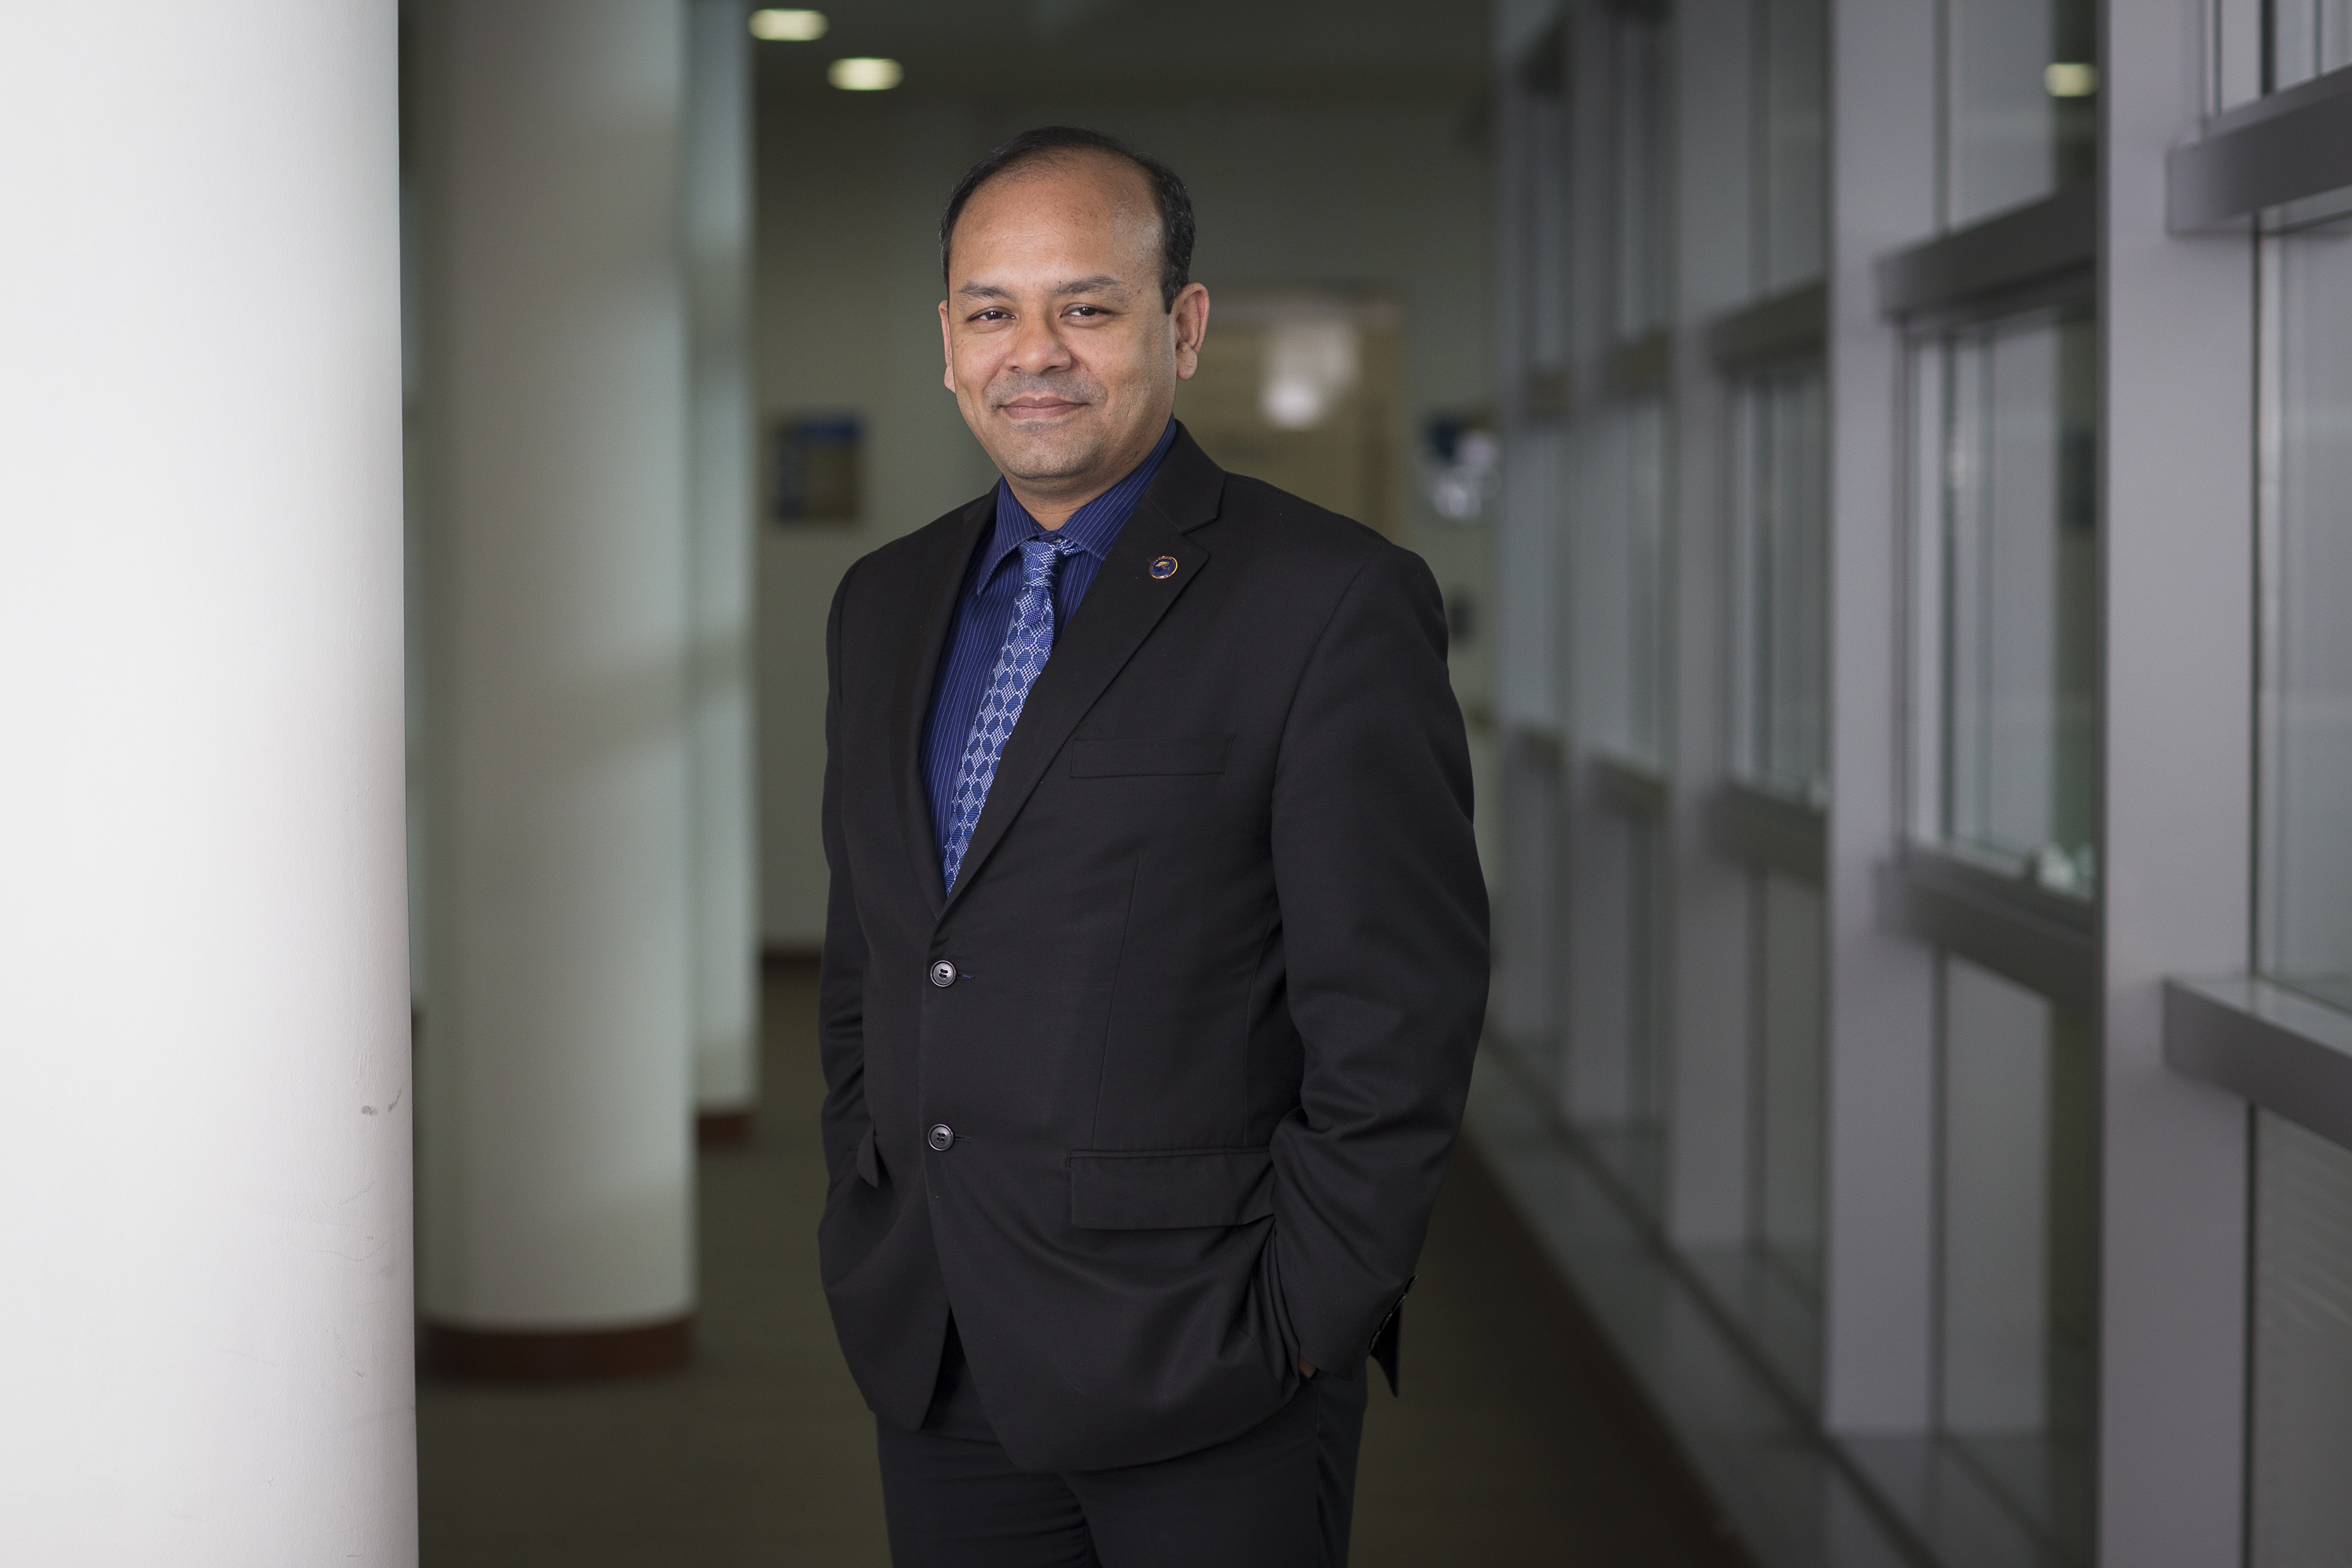 Aurobindo Ghosh, Assistant Professor of Finance